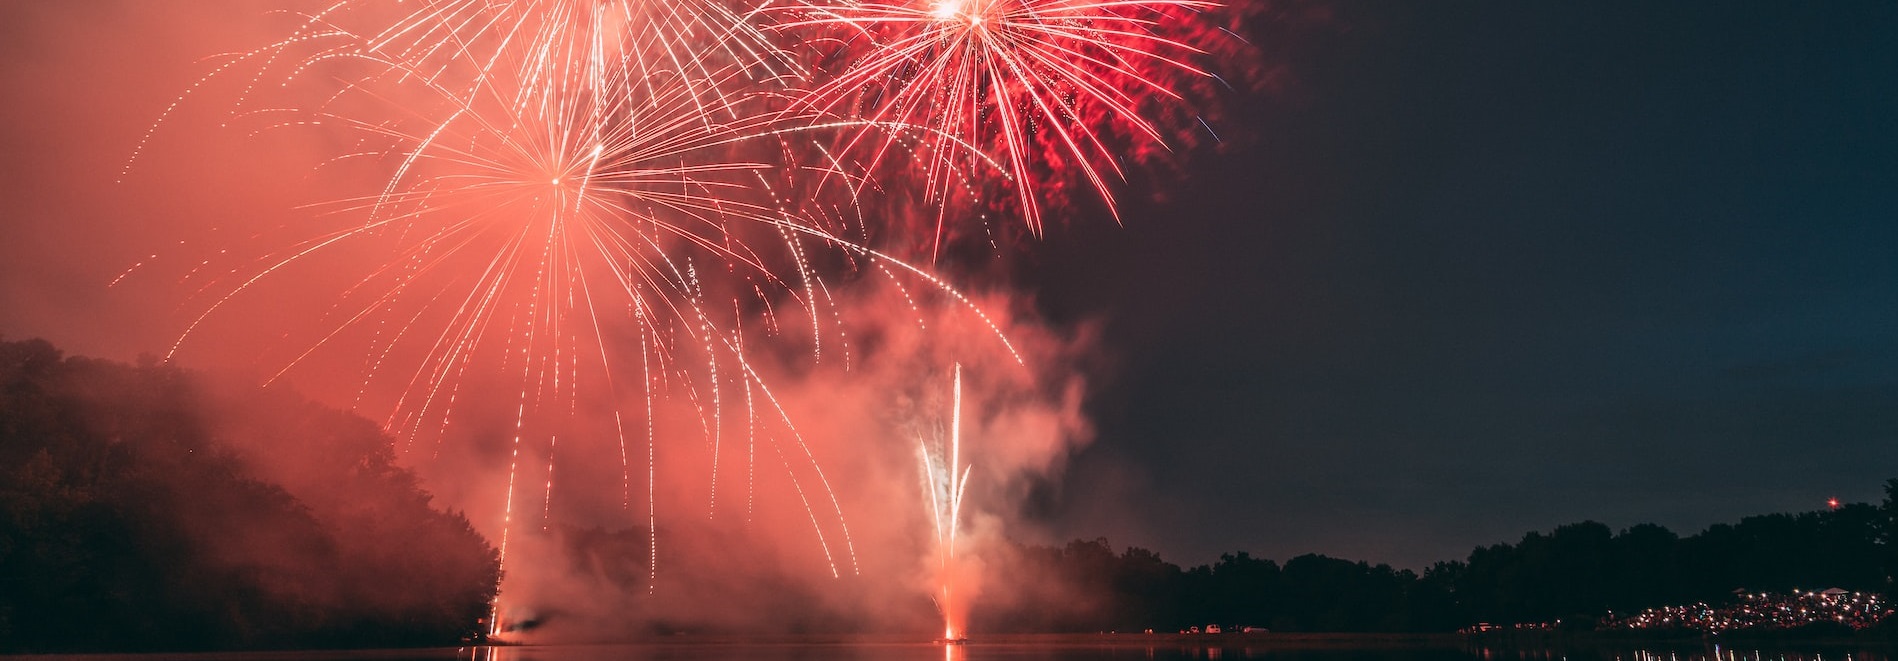 Fireworks in Buddy attic lake | Breast Cancer Car Donations